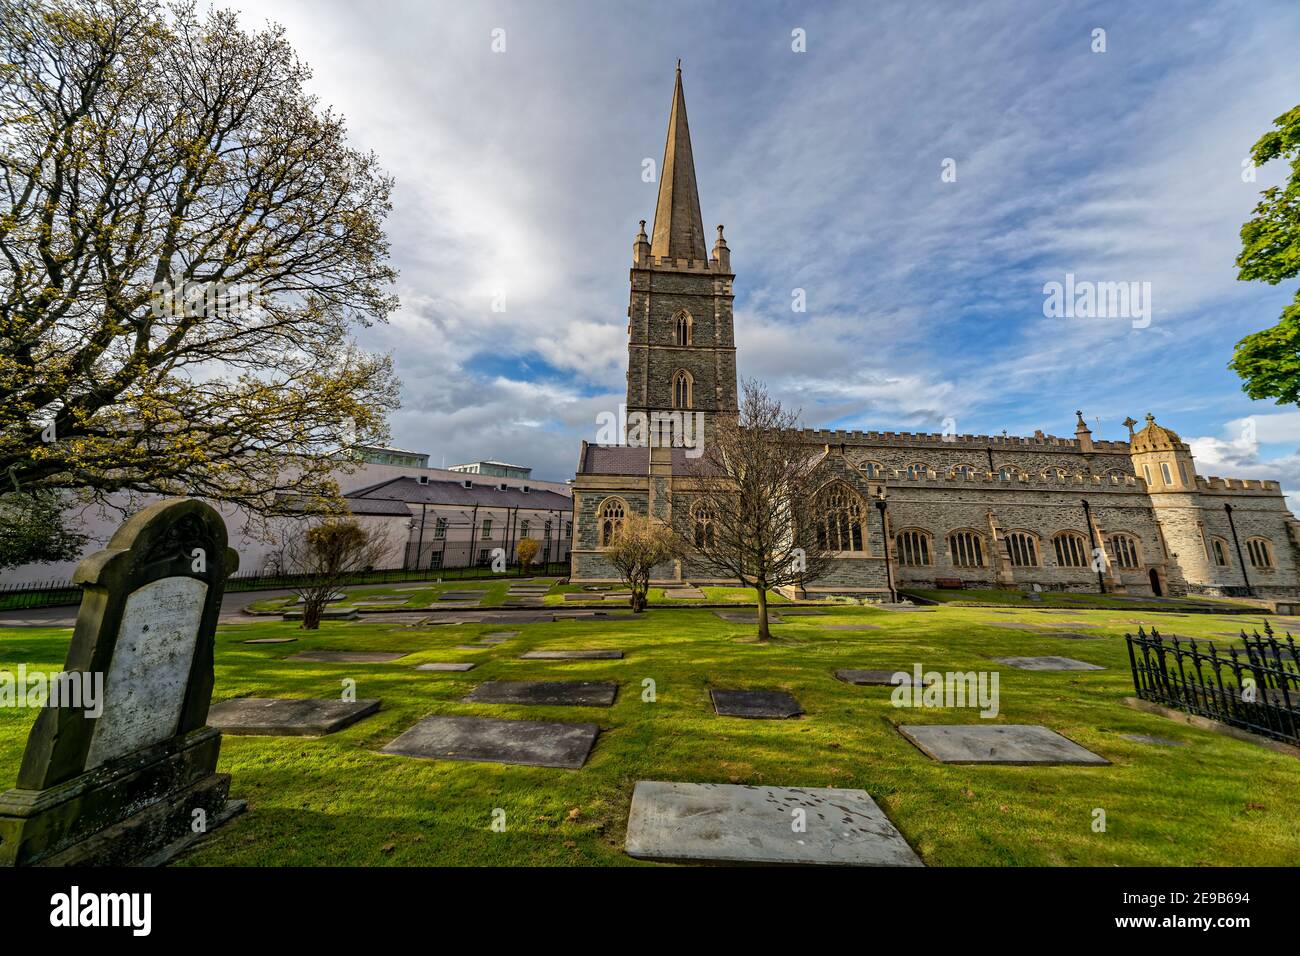 Londonderry, Irlande du Nord, Royaume-Uni. 28 avril 2016. Cathédrale St Columb le 28 avril 2016 à Londonderry, Irlande du Nord, Royaume-Uni. Banque D'Images